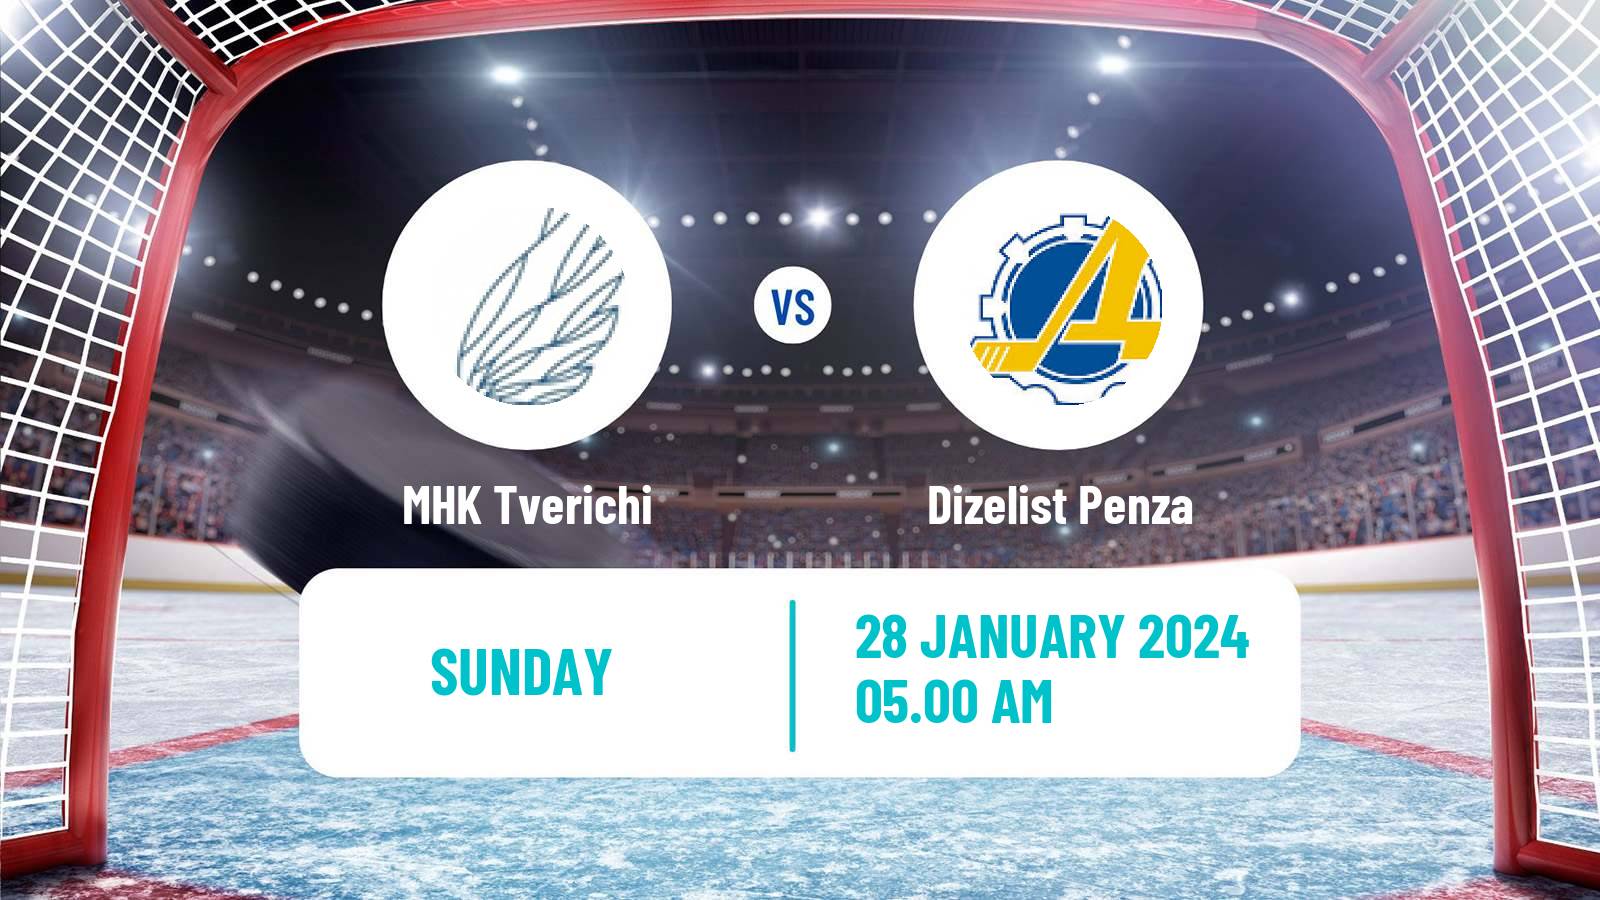 Hockey NMHL Tverichi - Dizelist Penza